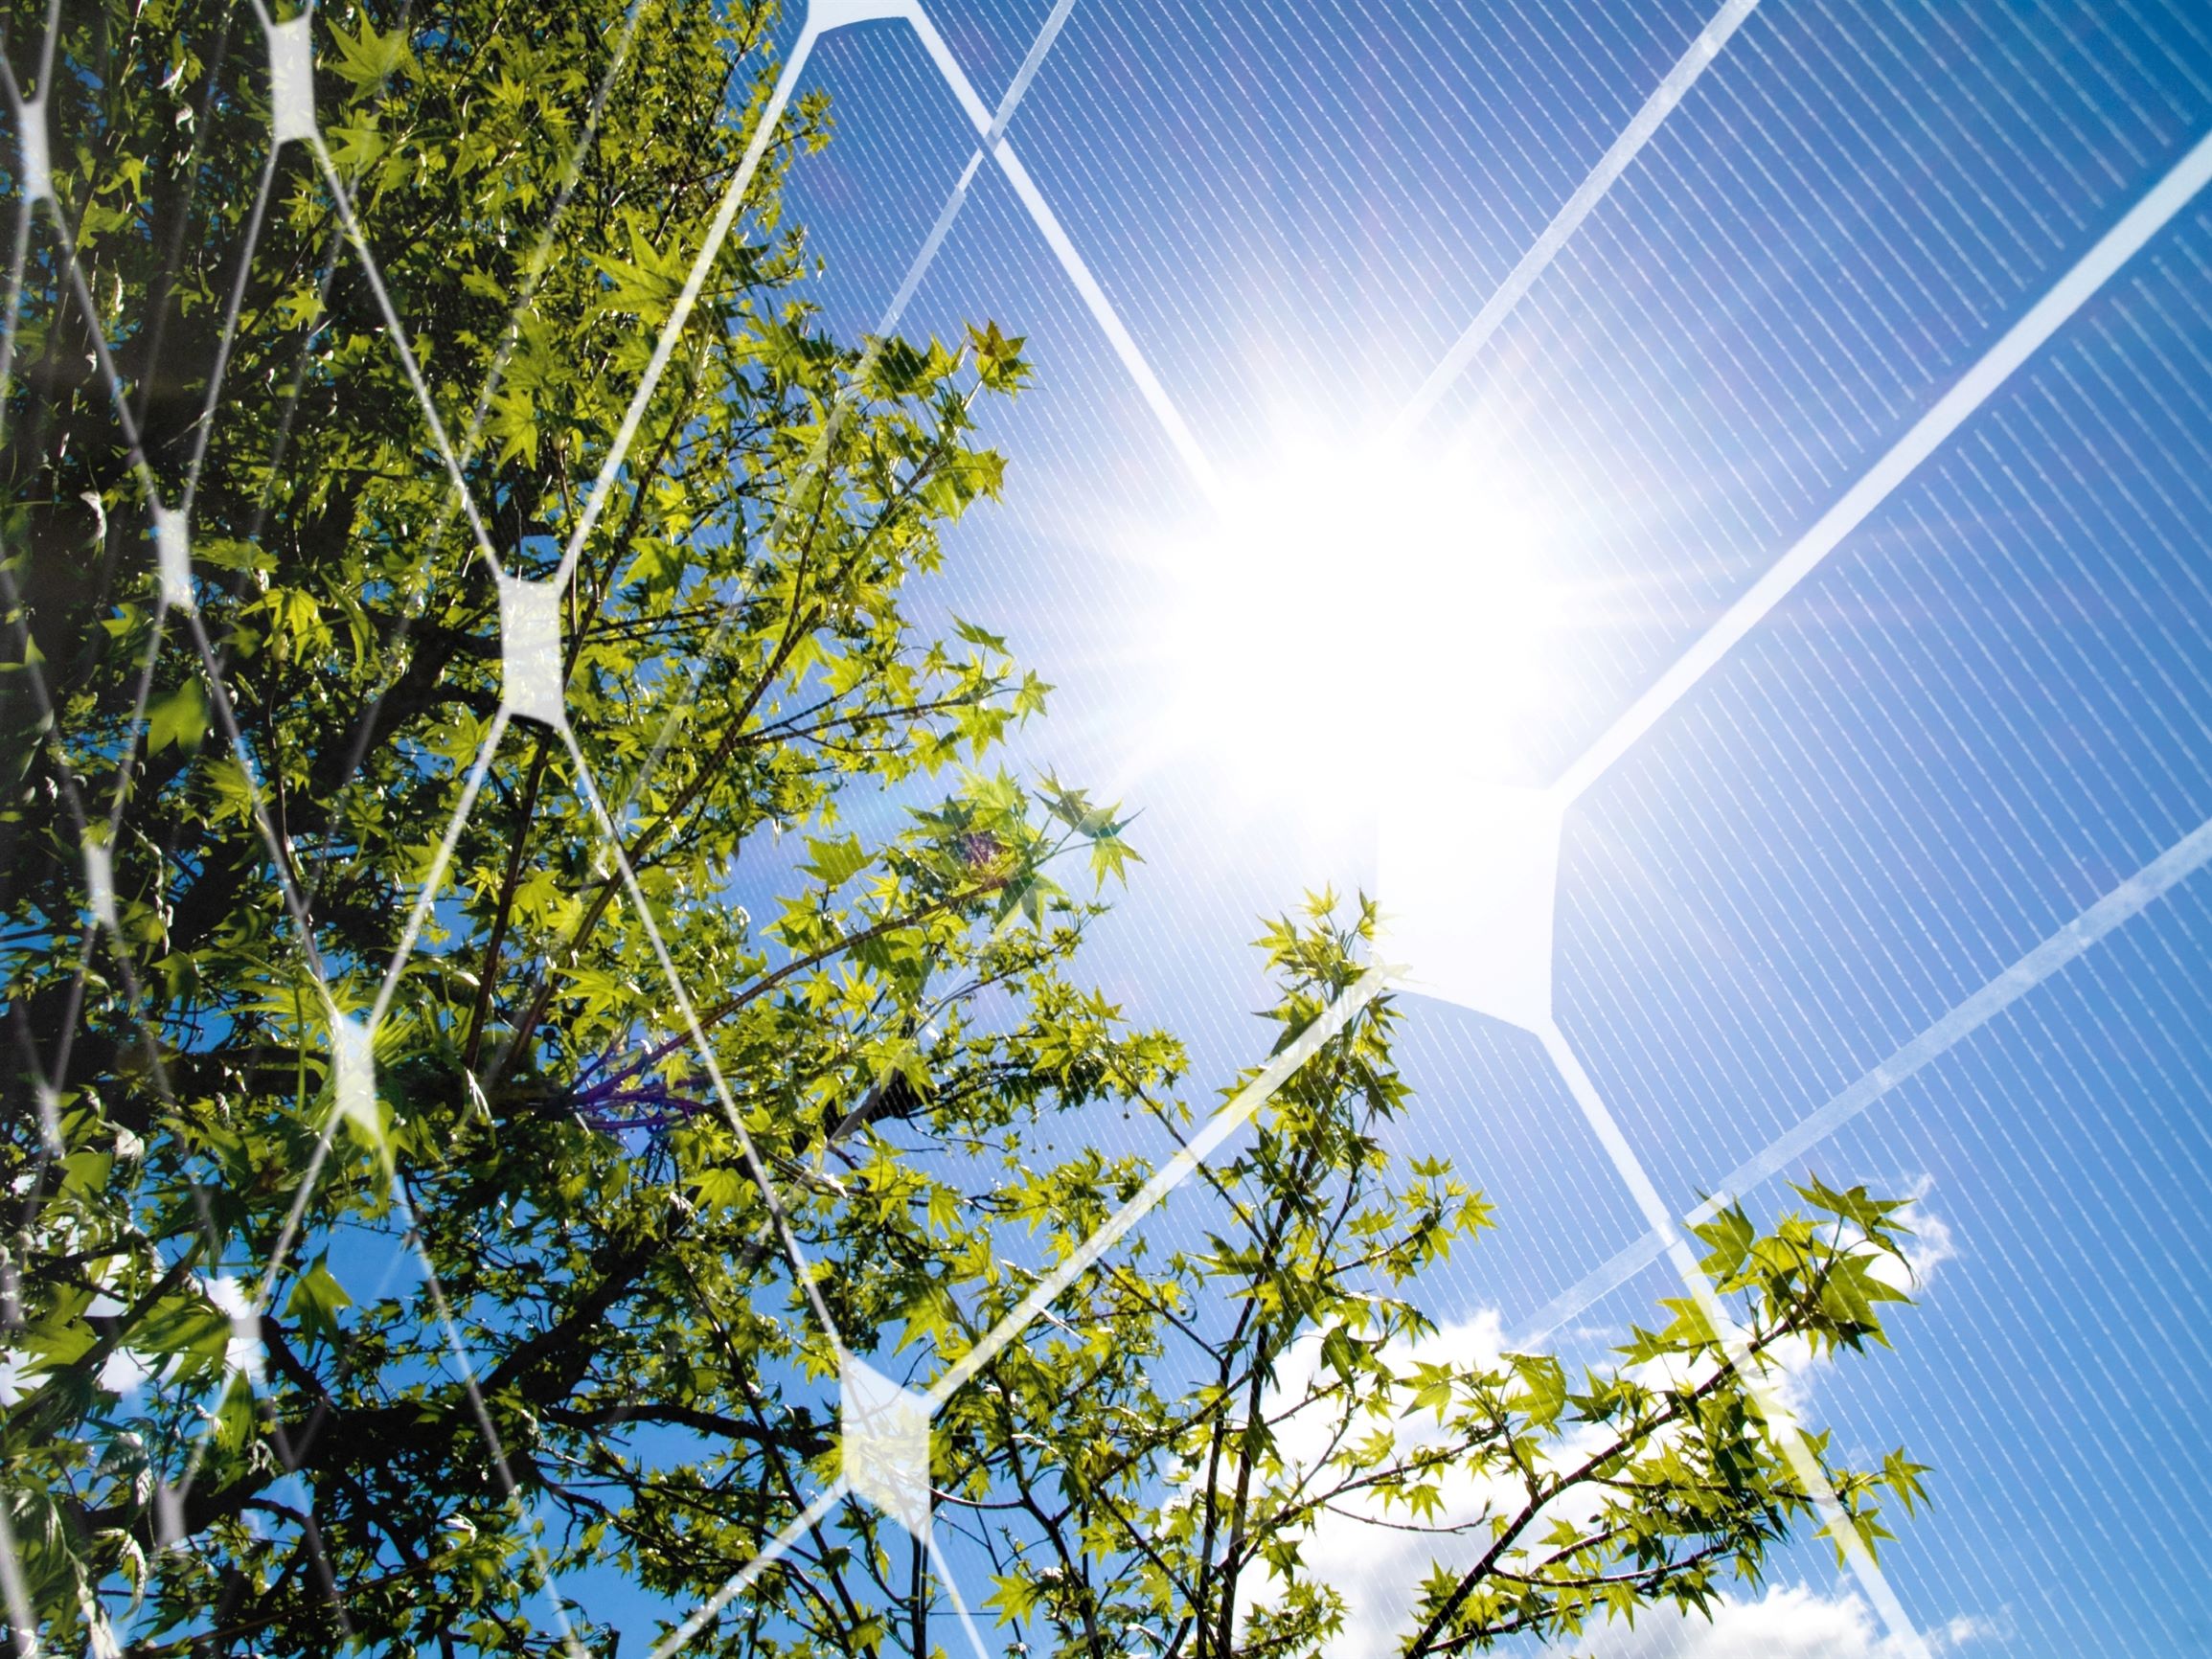 Clean solar panels near trees